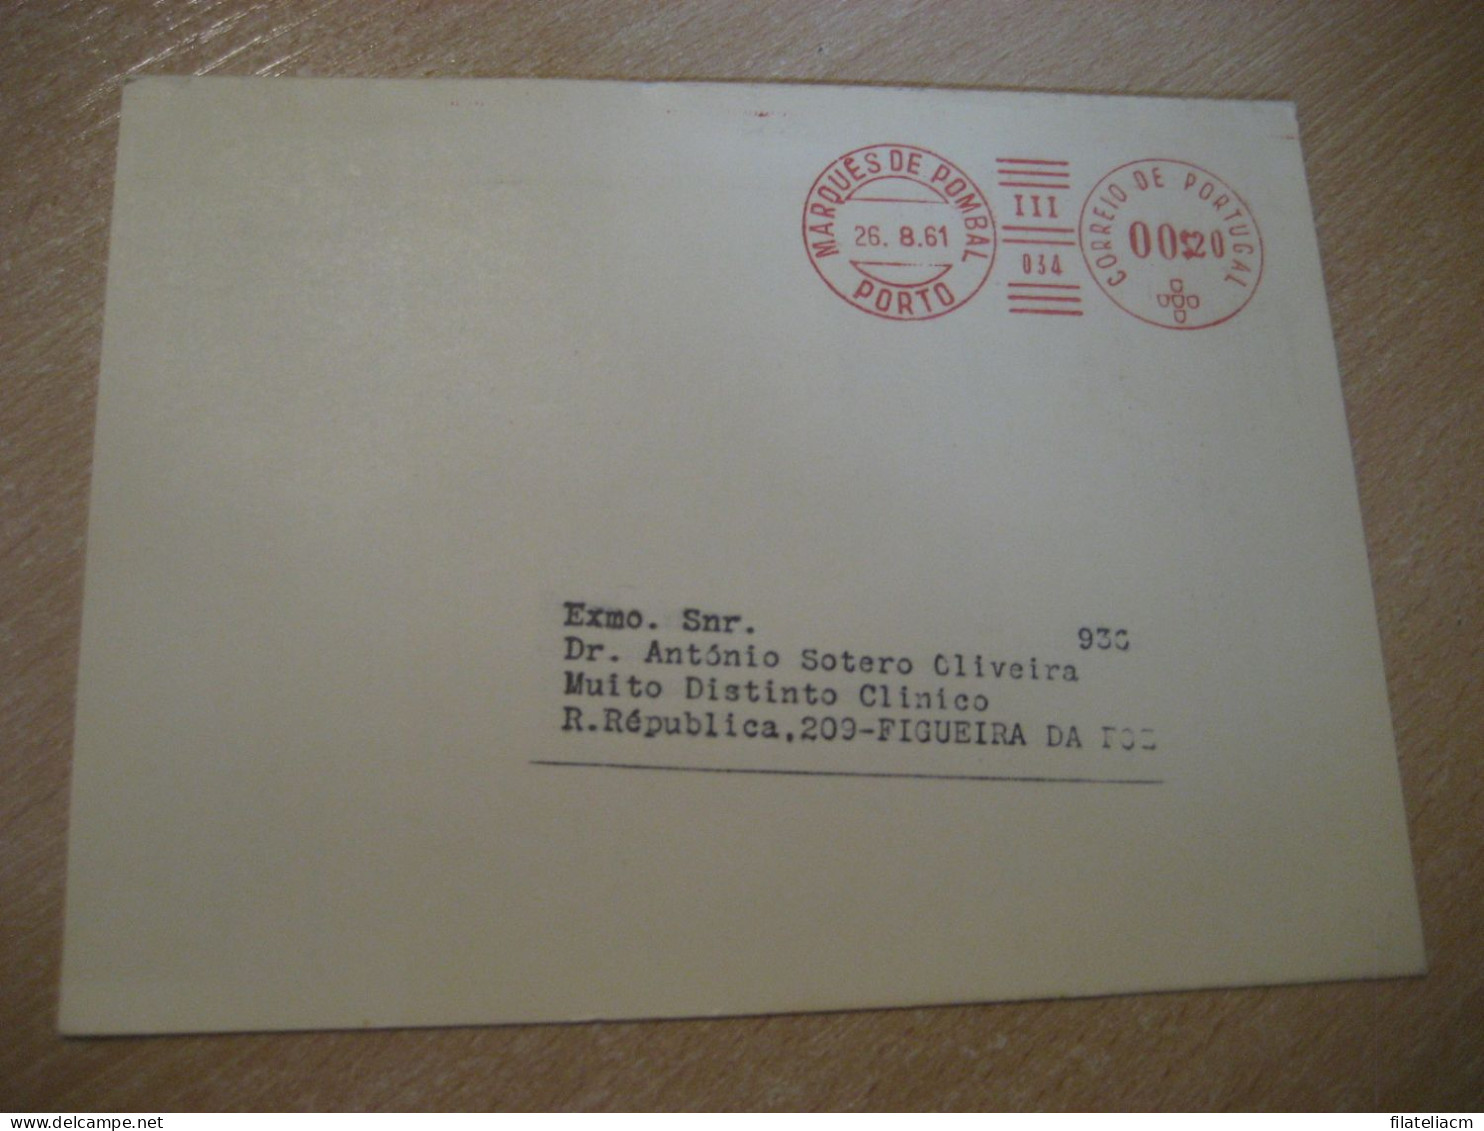 PORTO 1961 To Figueira Da Foz BIAL Cosatetril Tetraciclina Glucosamina Pharmacy Health Meter Mail Document Card PORTUGAL - Storia Postale